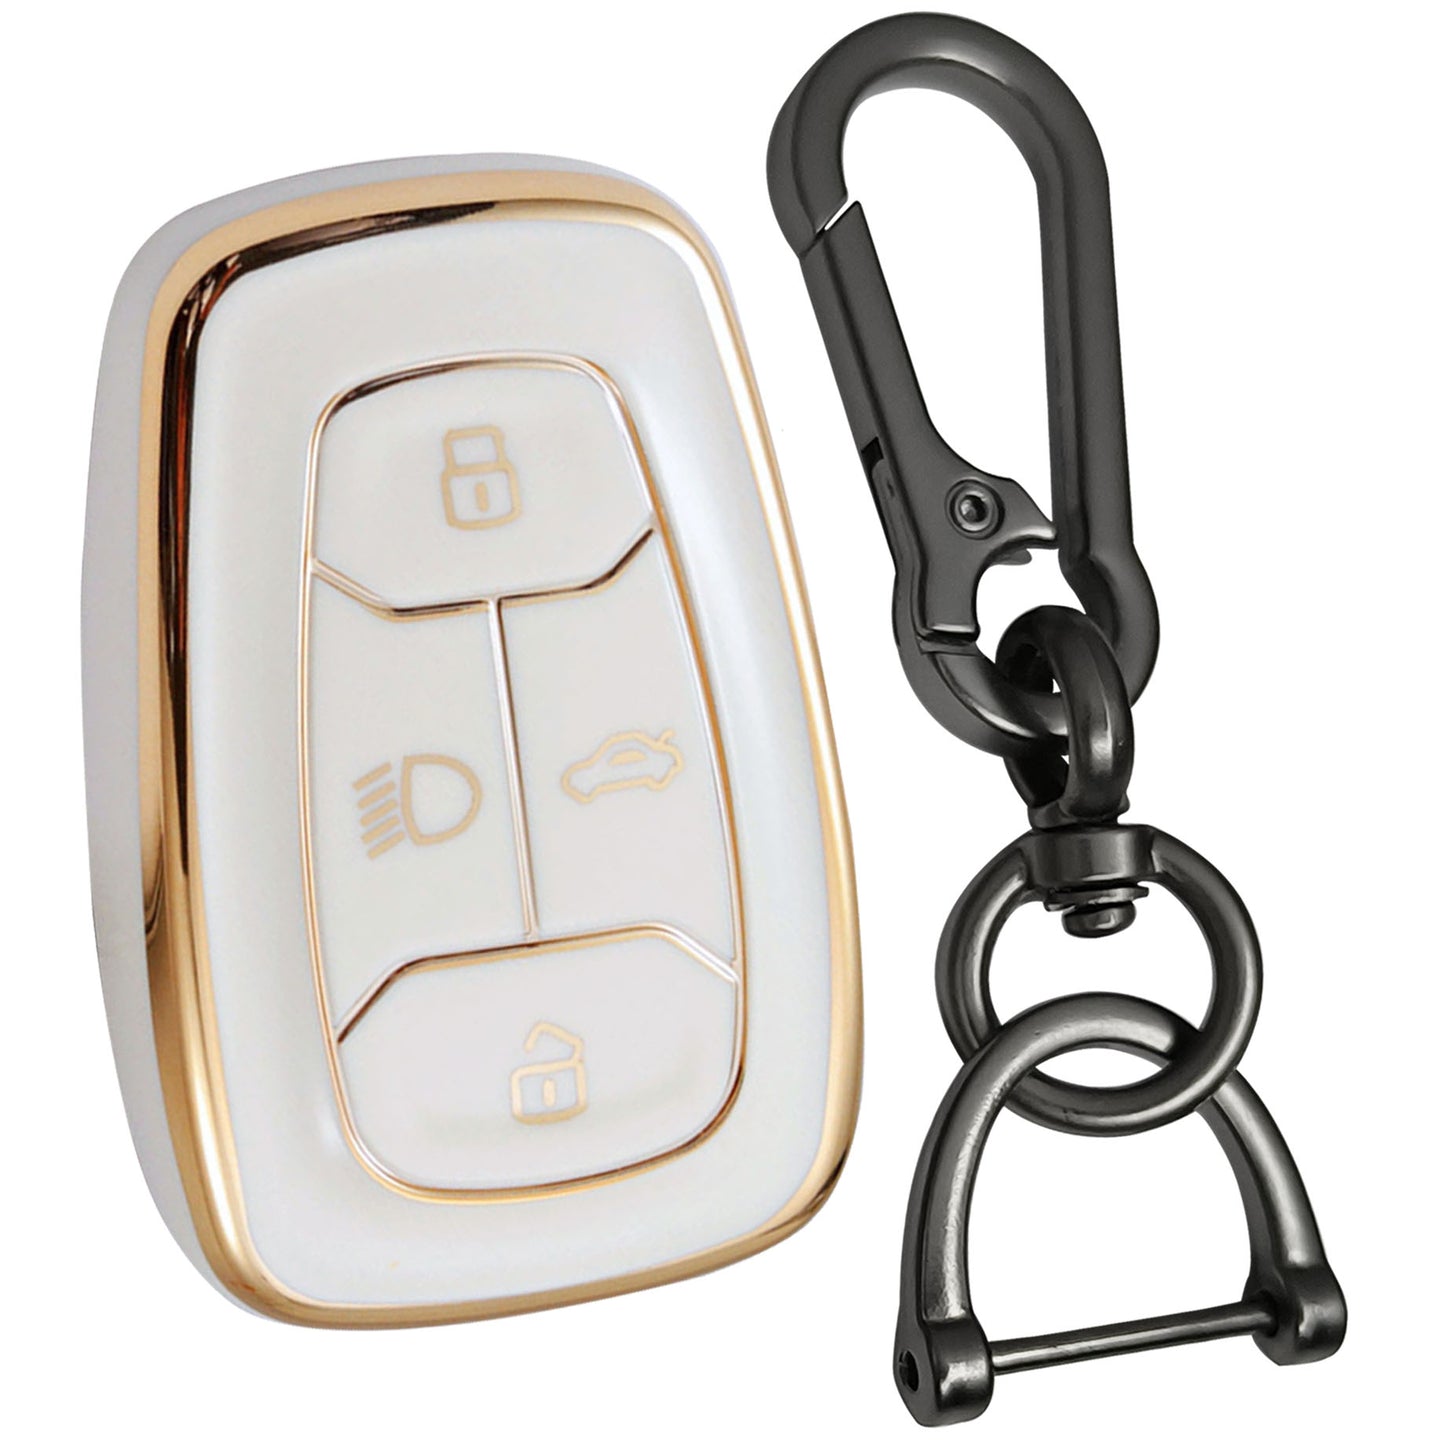 tata nexon harrier safari punch altroz tpu cover white gold car keycover case accessories keychain